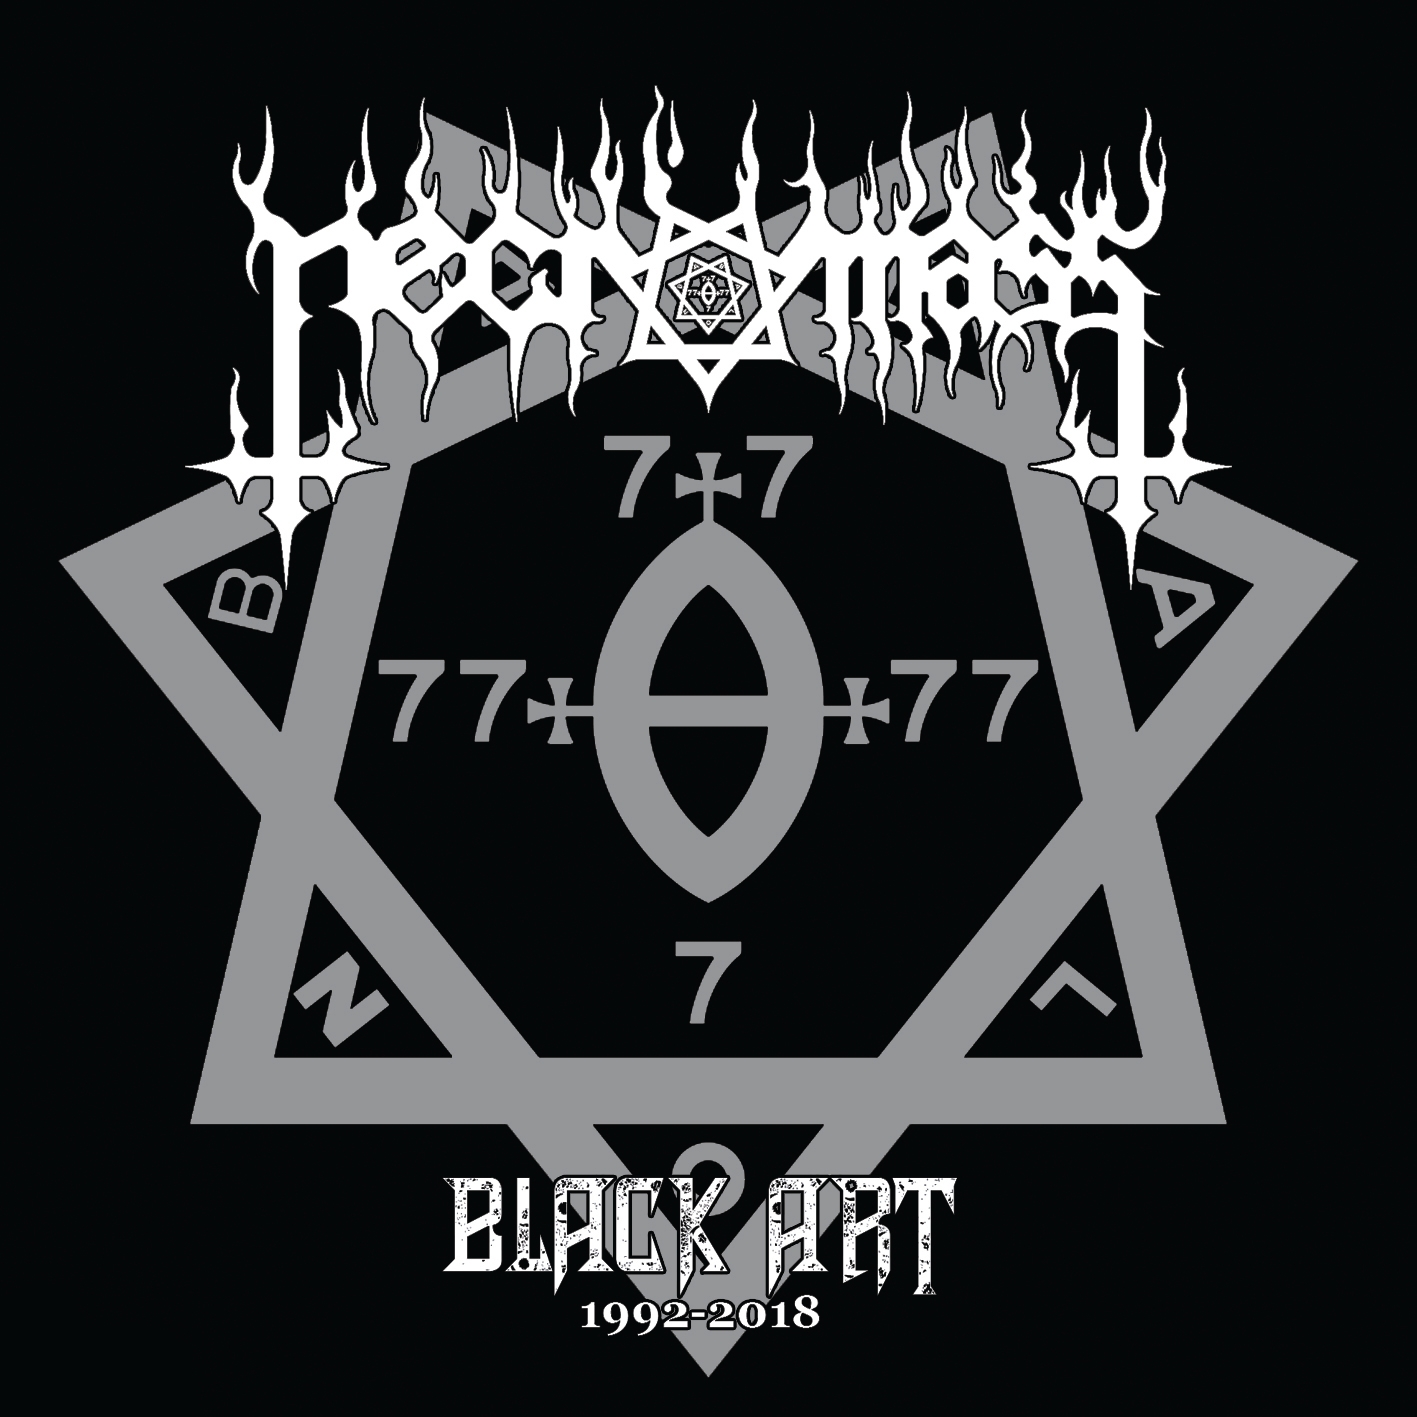 Necromass - Black Art 1992-2018